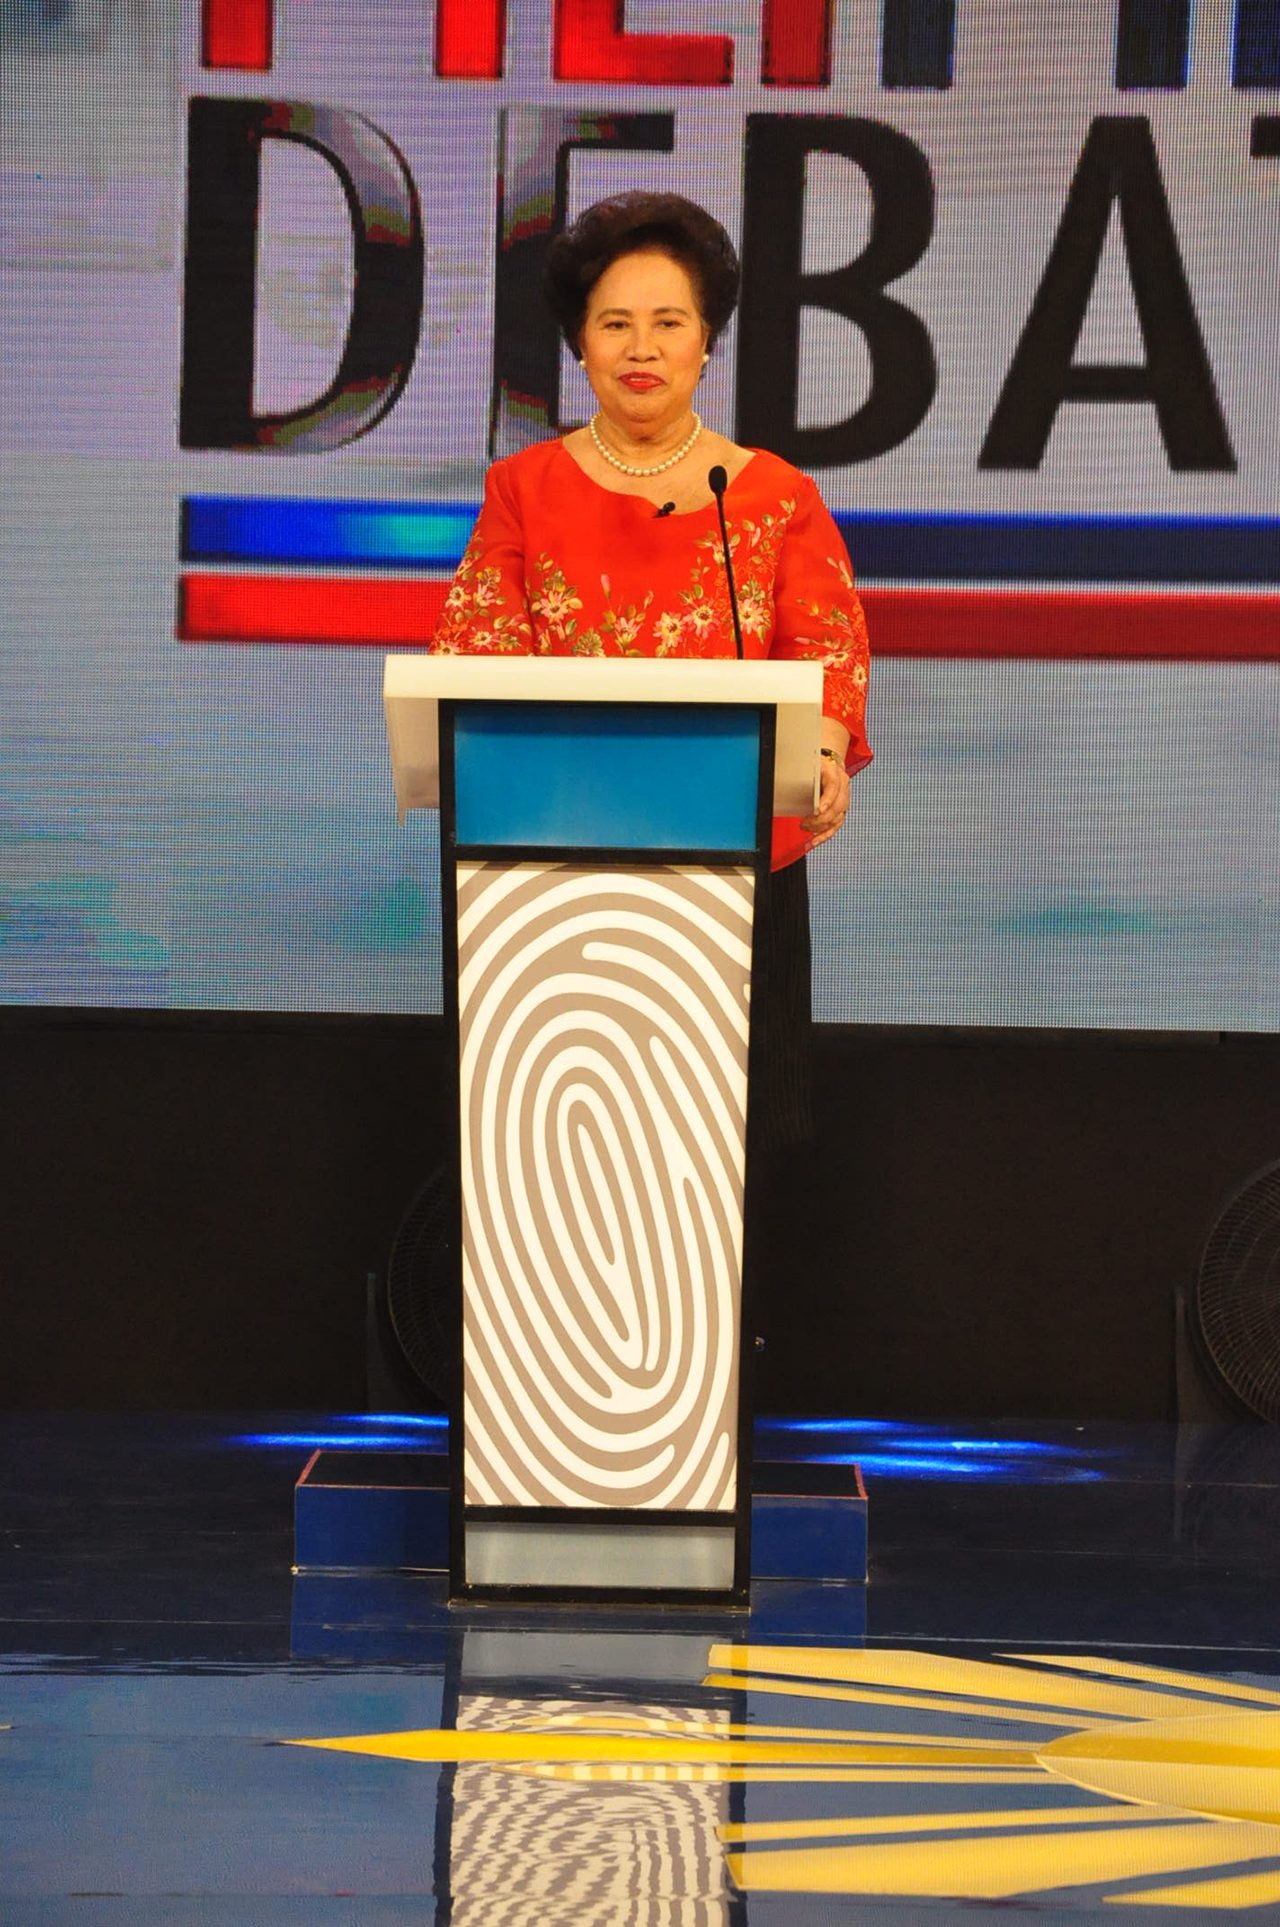 Miriam Santiago’s debate performance: ‘Not as good as expected’